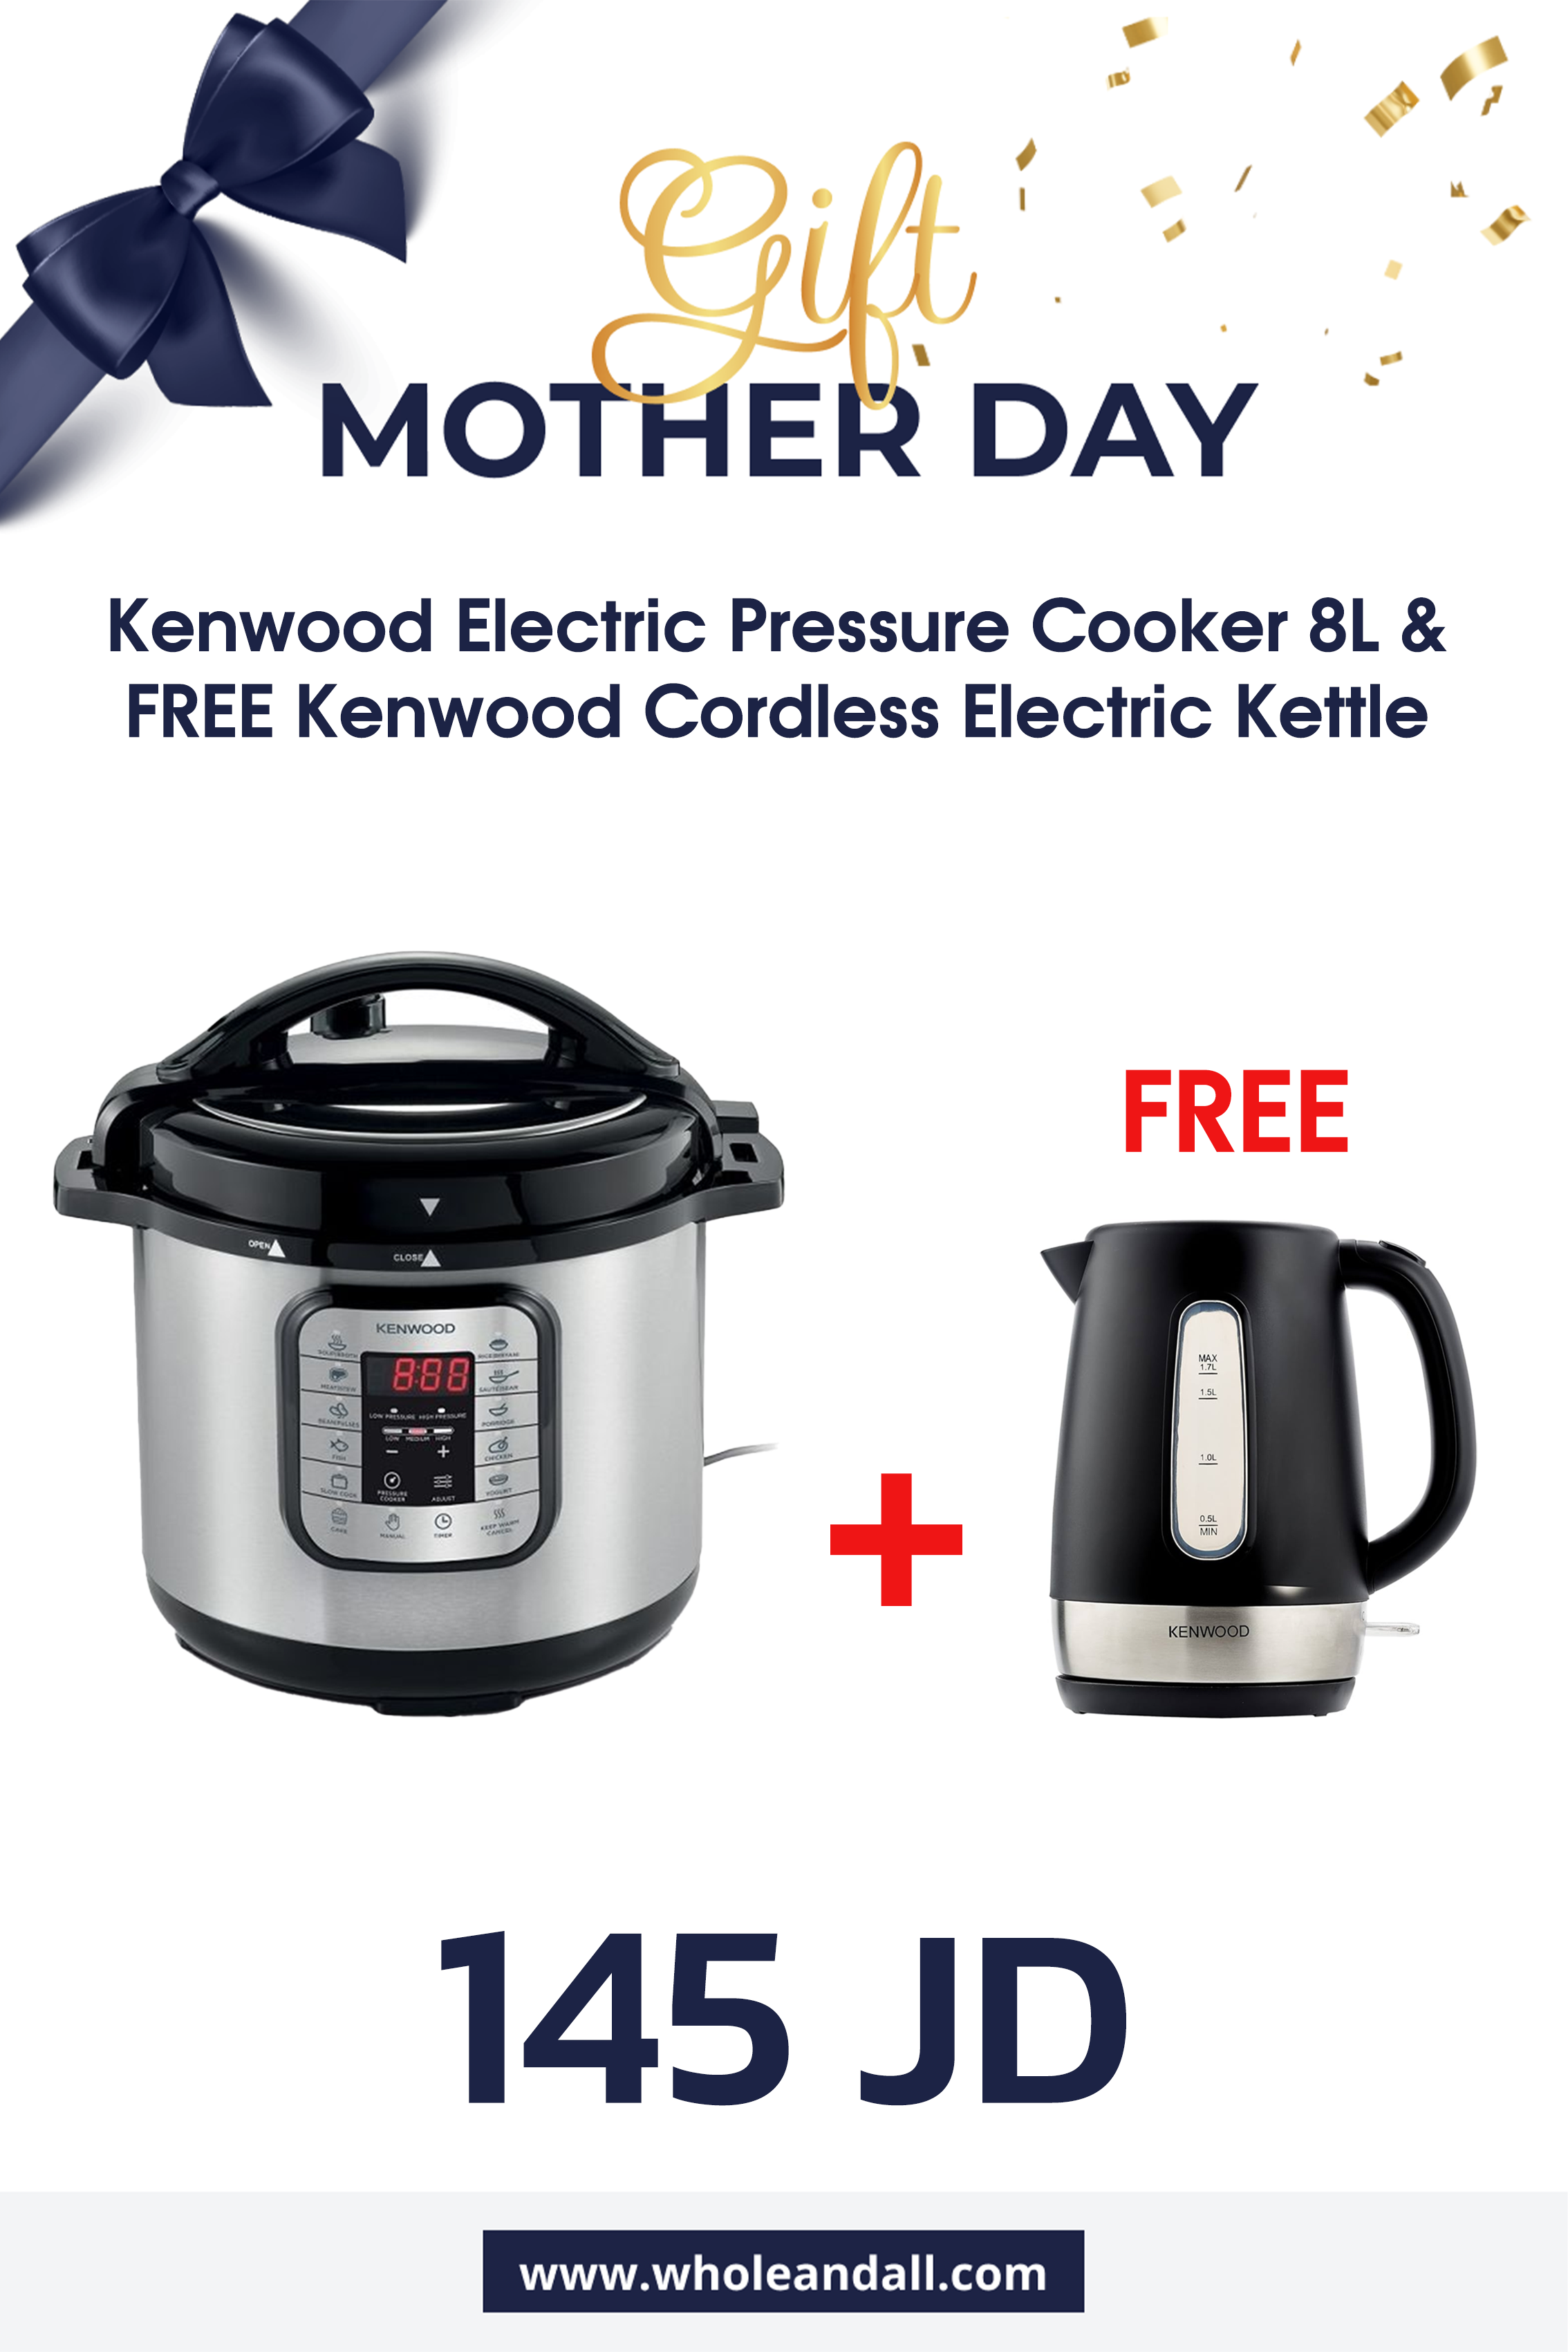 Kenwood Electric Pressure Cooker 8L & FREE Kenwood Cordless Electric Kettle